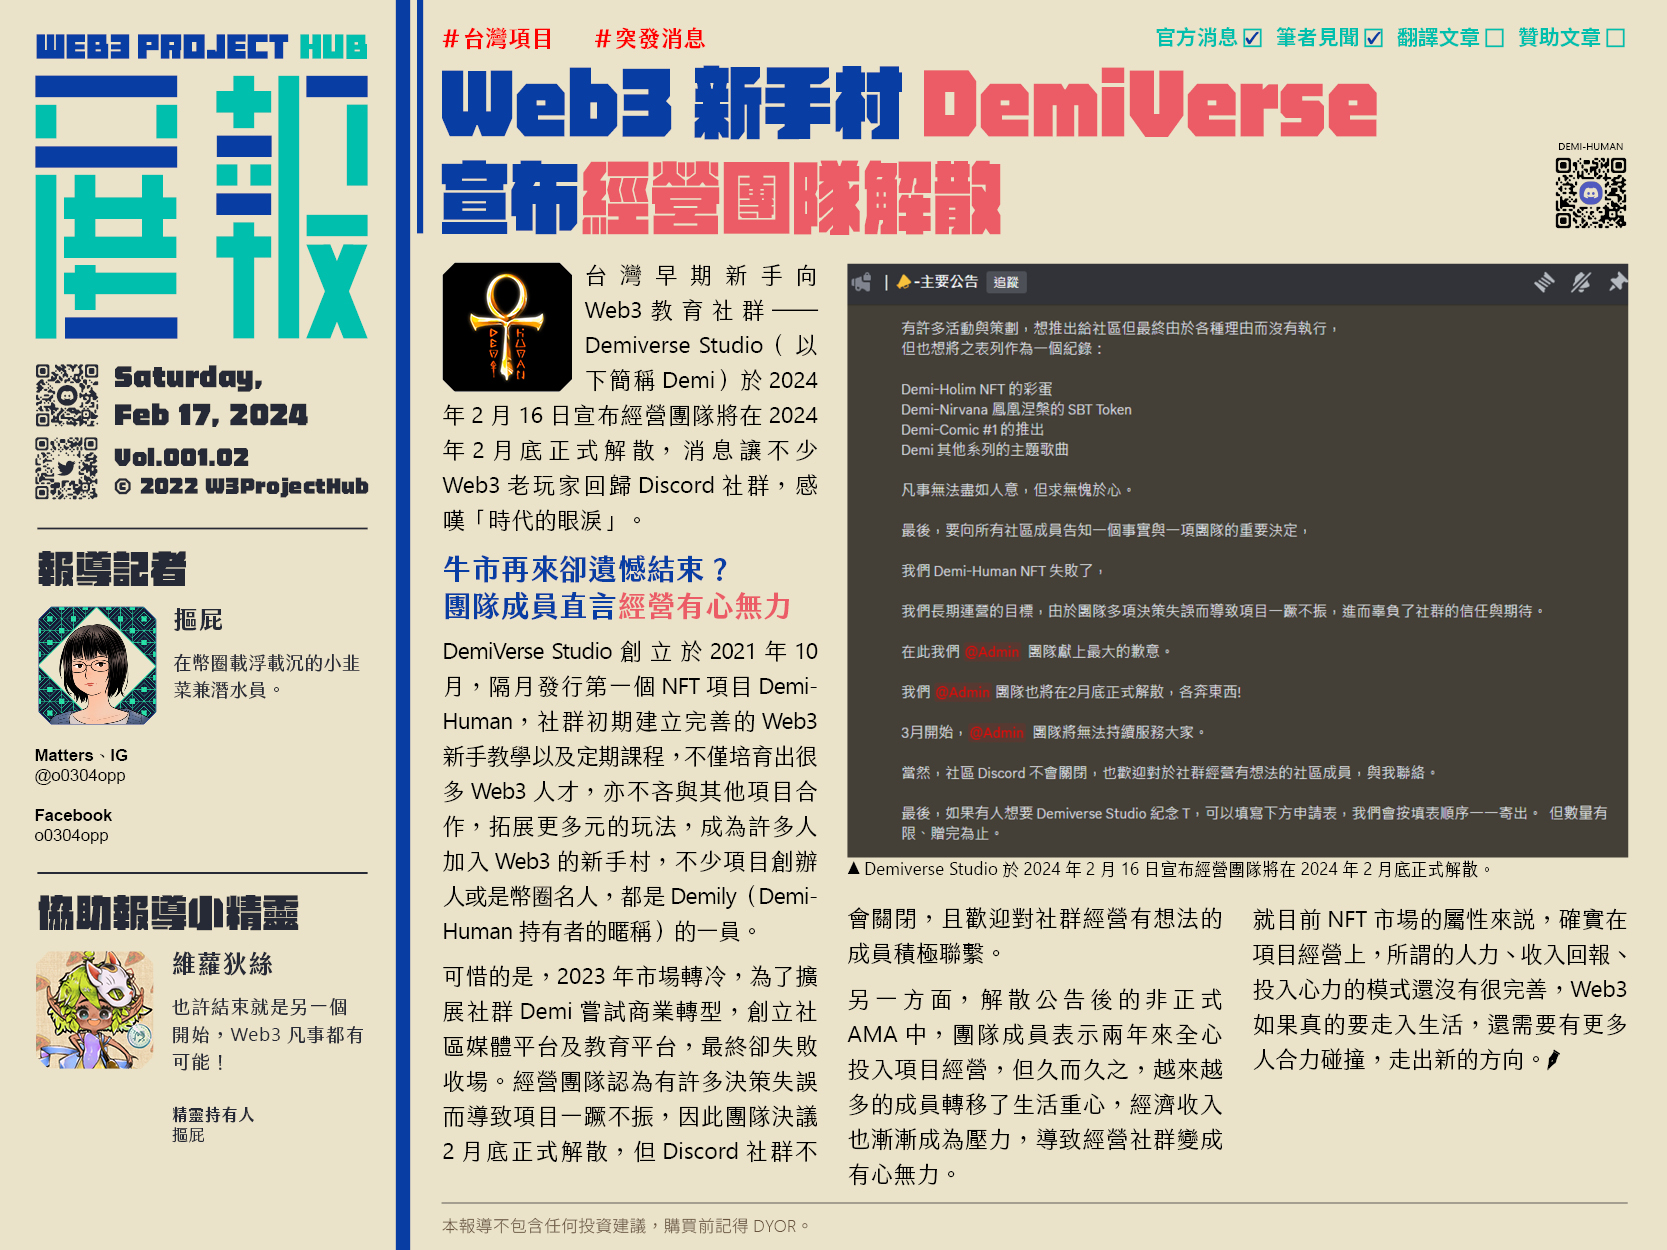 Web3 新手村 DemiVerse 宣布經營團隊解散